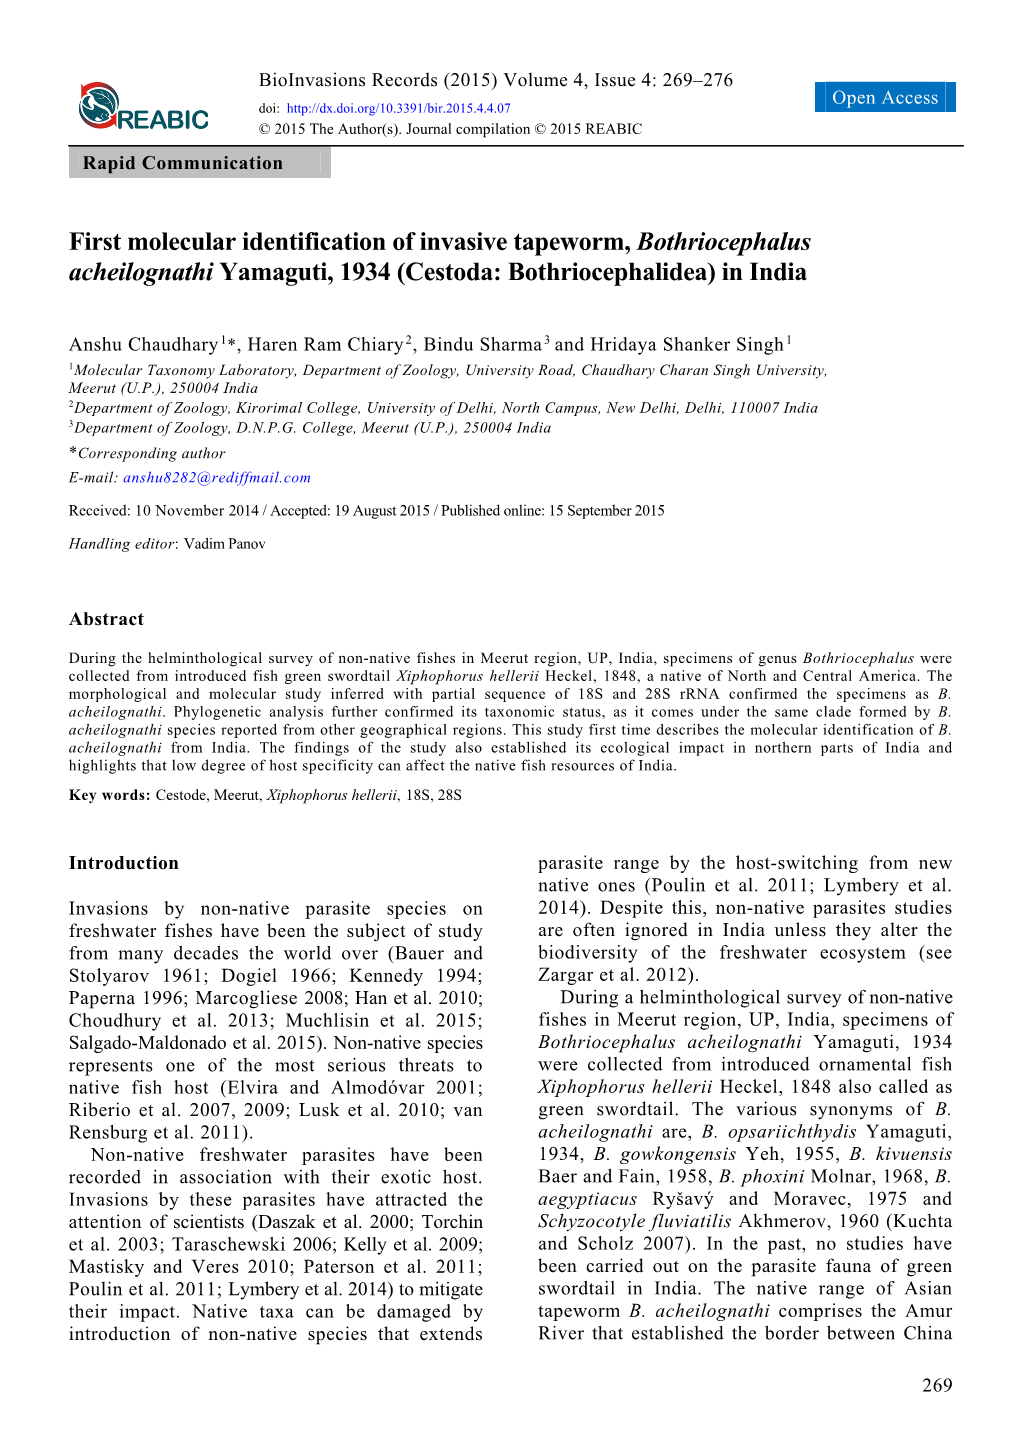 First Molecular Identification of Invasive Tapeworm, Bothriocephalus Acheilognathi Yamaguti, 1934 (Cestoda: Bothriocephalidea) in India